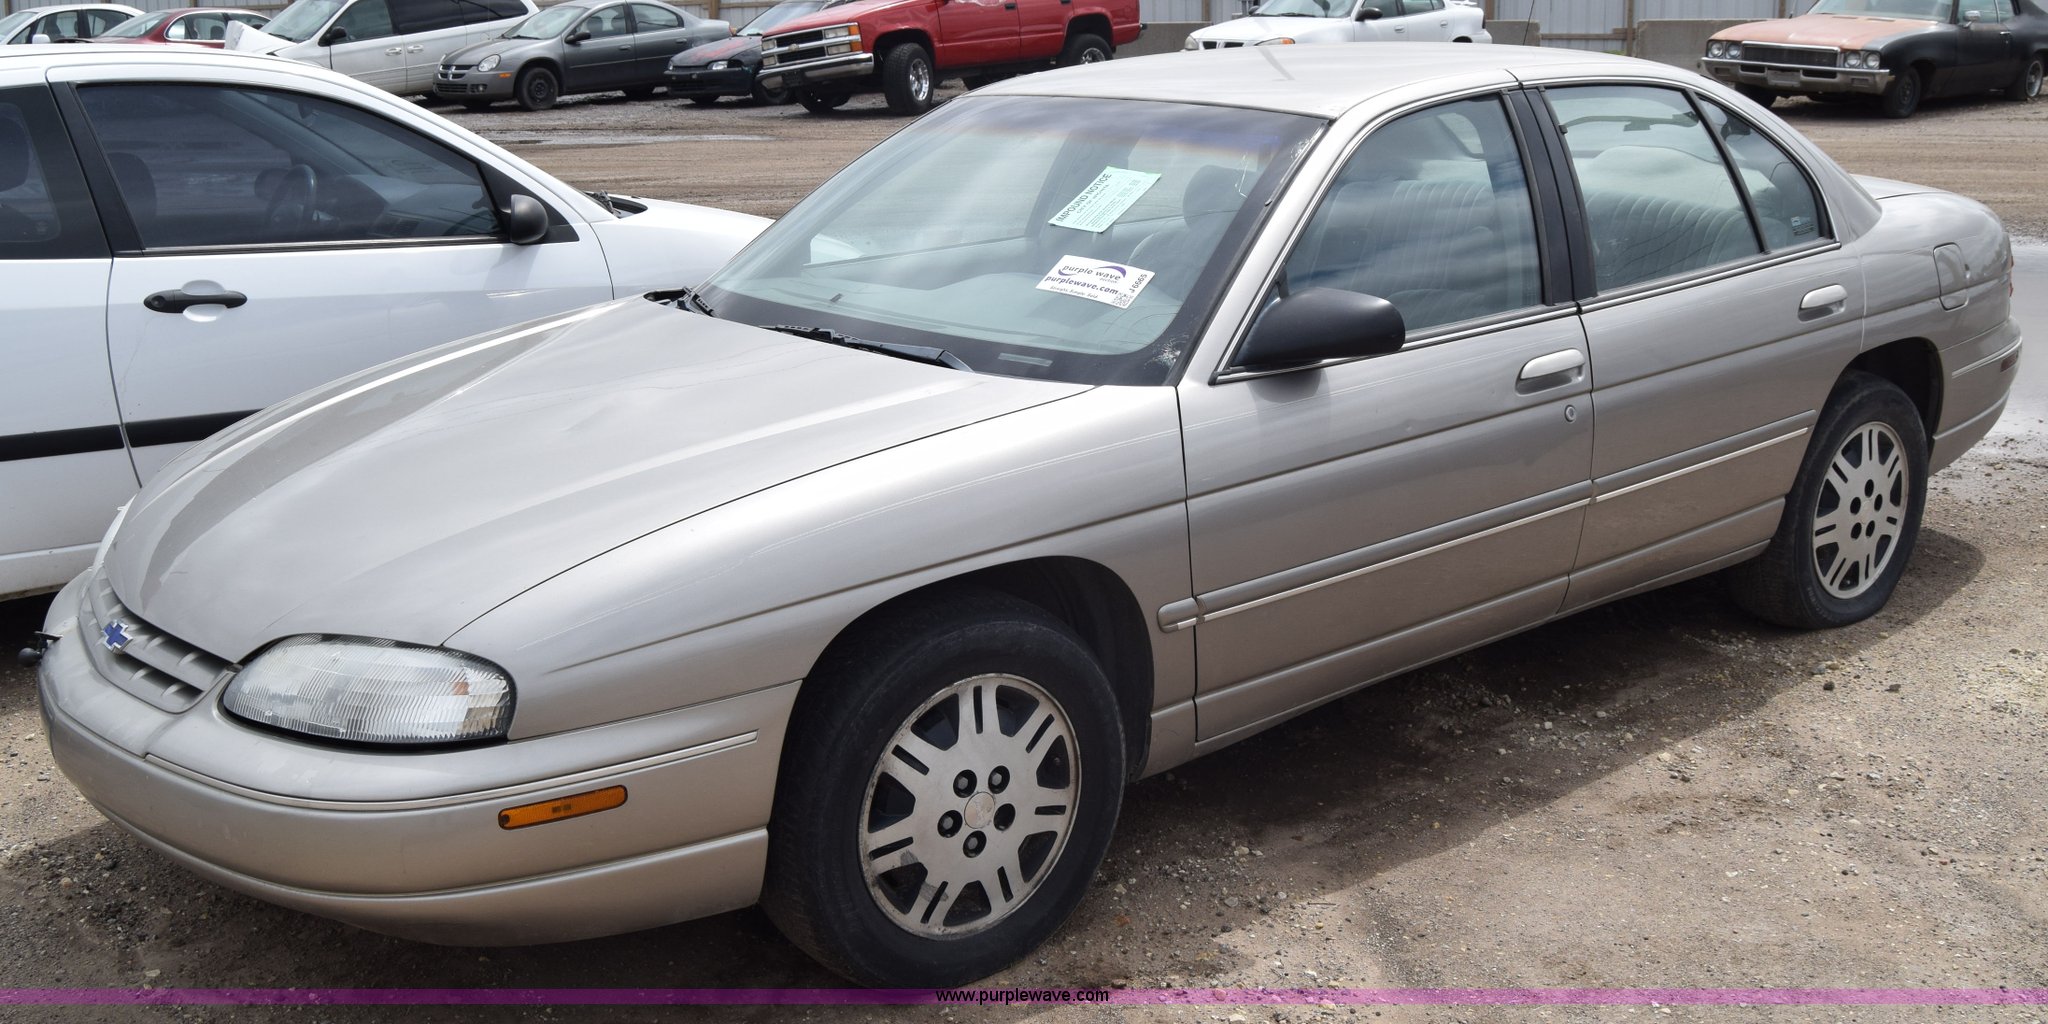 1999 Chevrolet Lumina in Wichita, KS | Item J6665 sold | Purple Wave